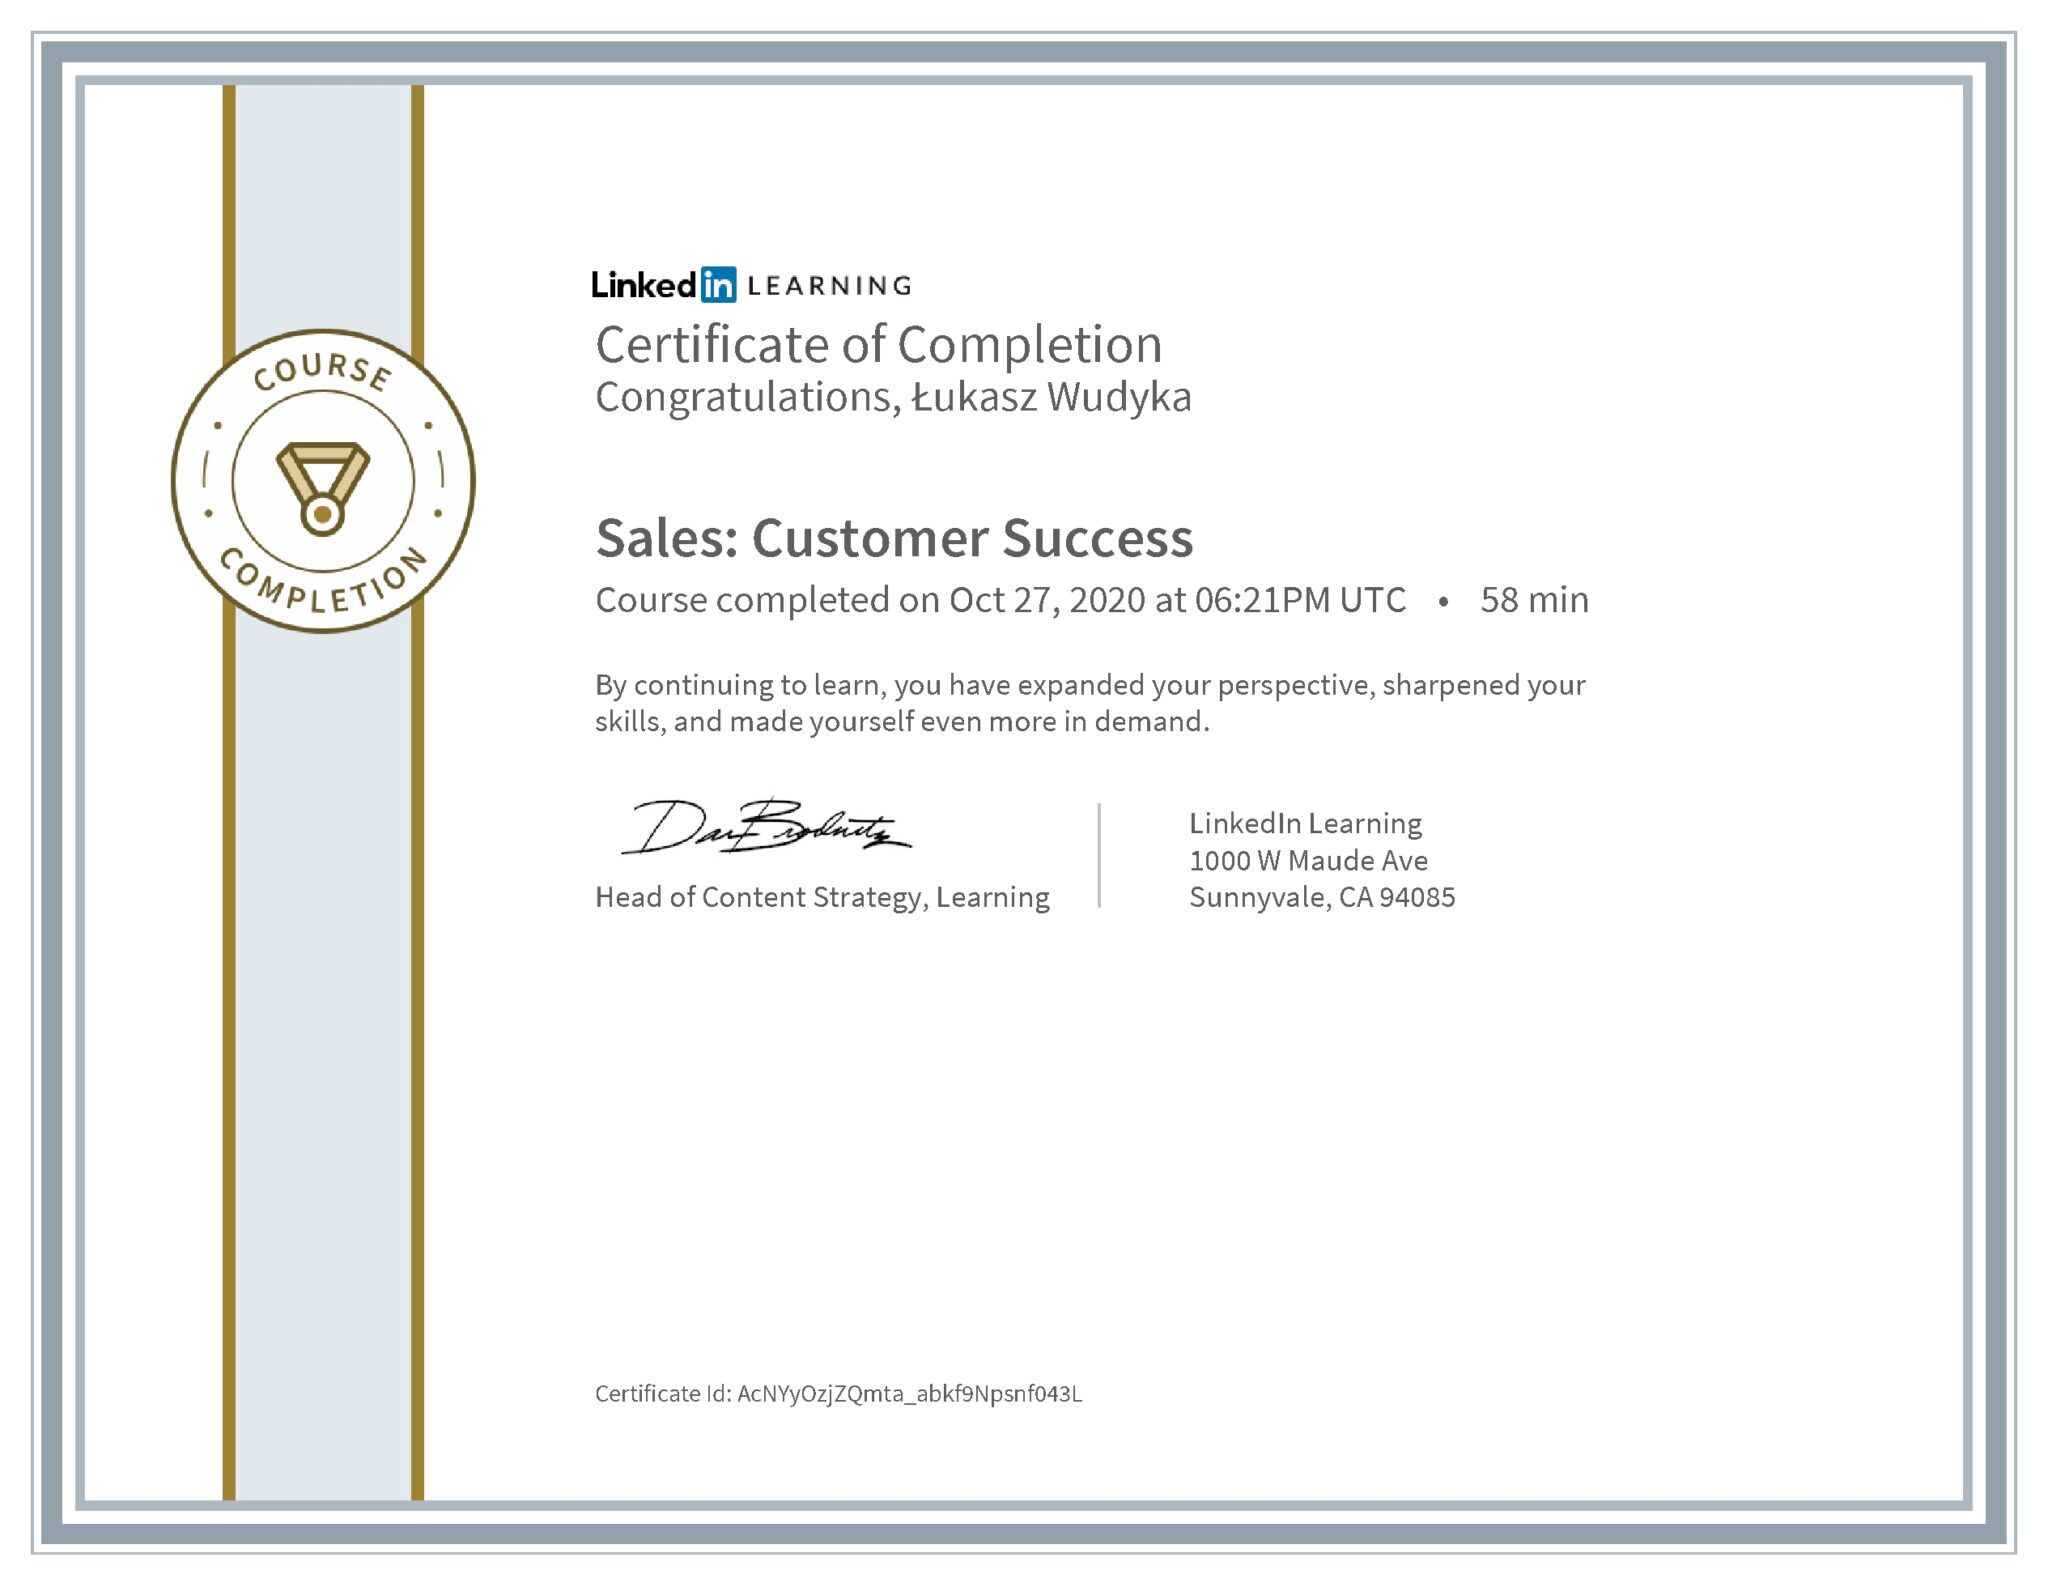 Łukasz Wudyka certyfikat LinkedIn Sales: Customer Success